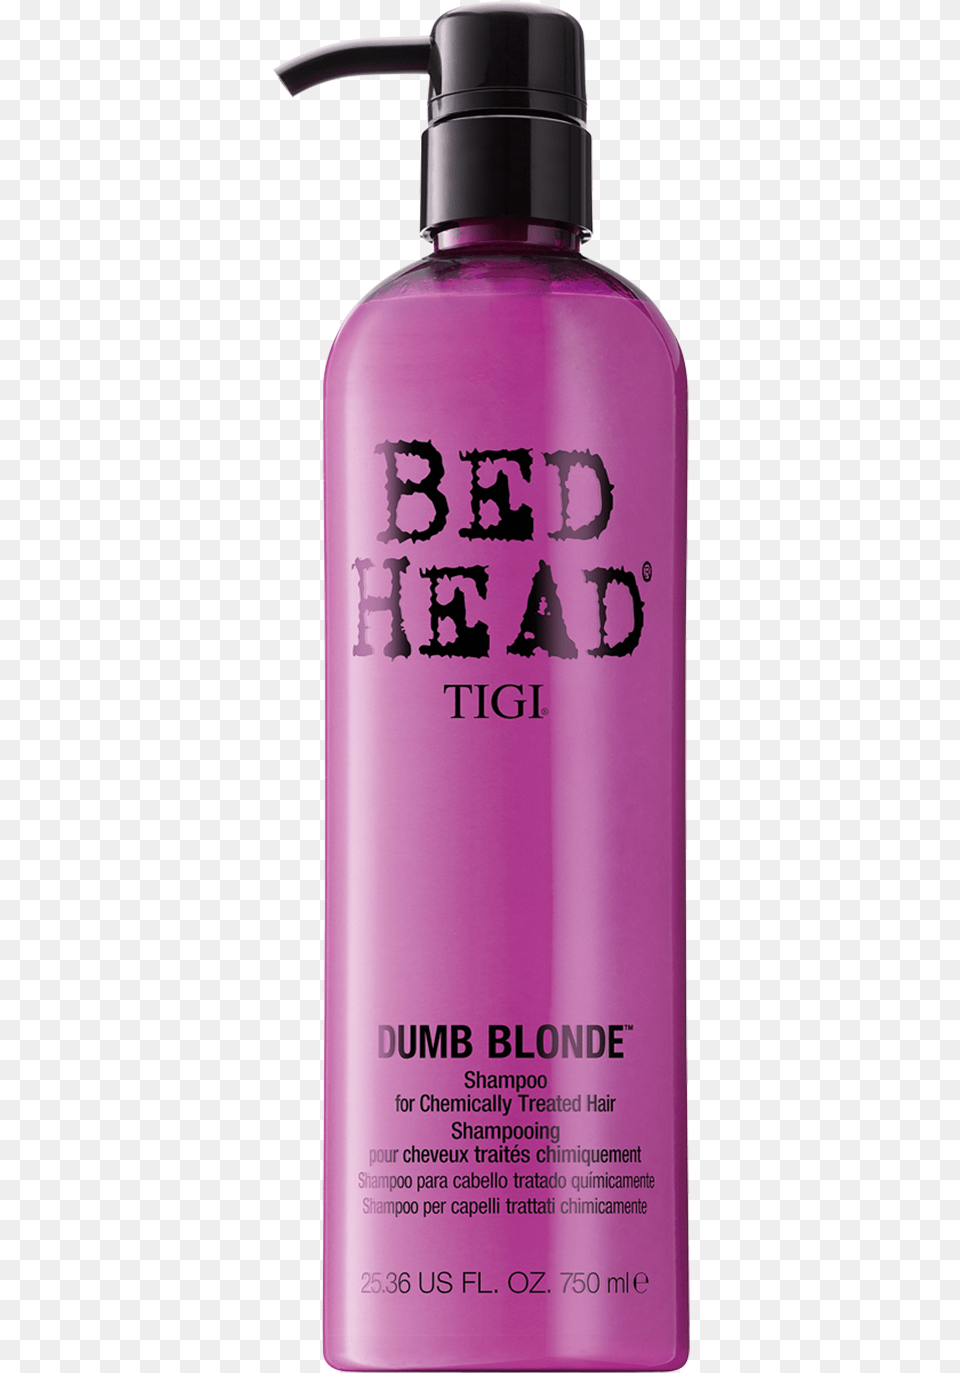 Dumb Blonde Shampoo Tigi Bed Head, Bottle, Cosmetics, Perfume Png Image